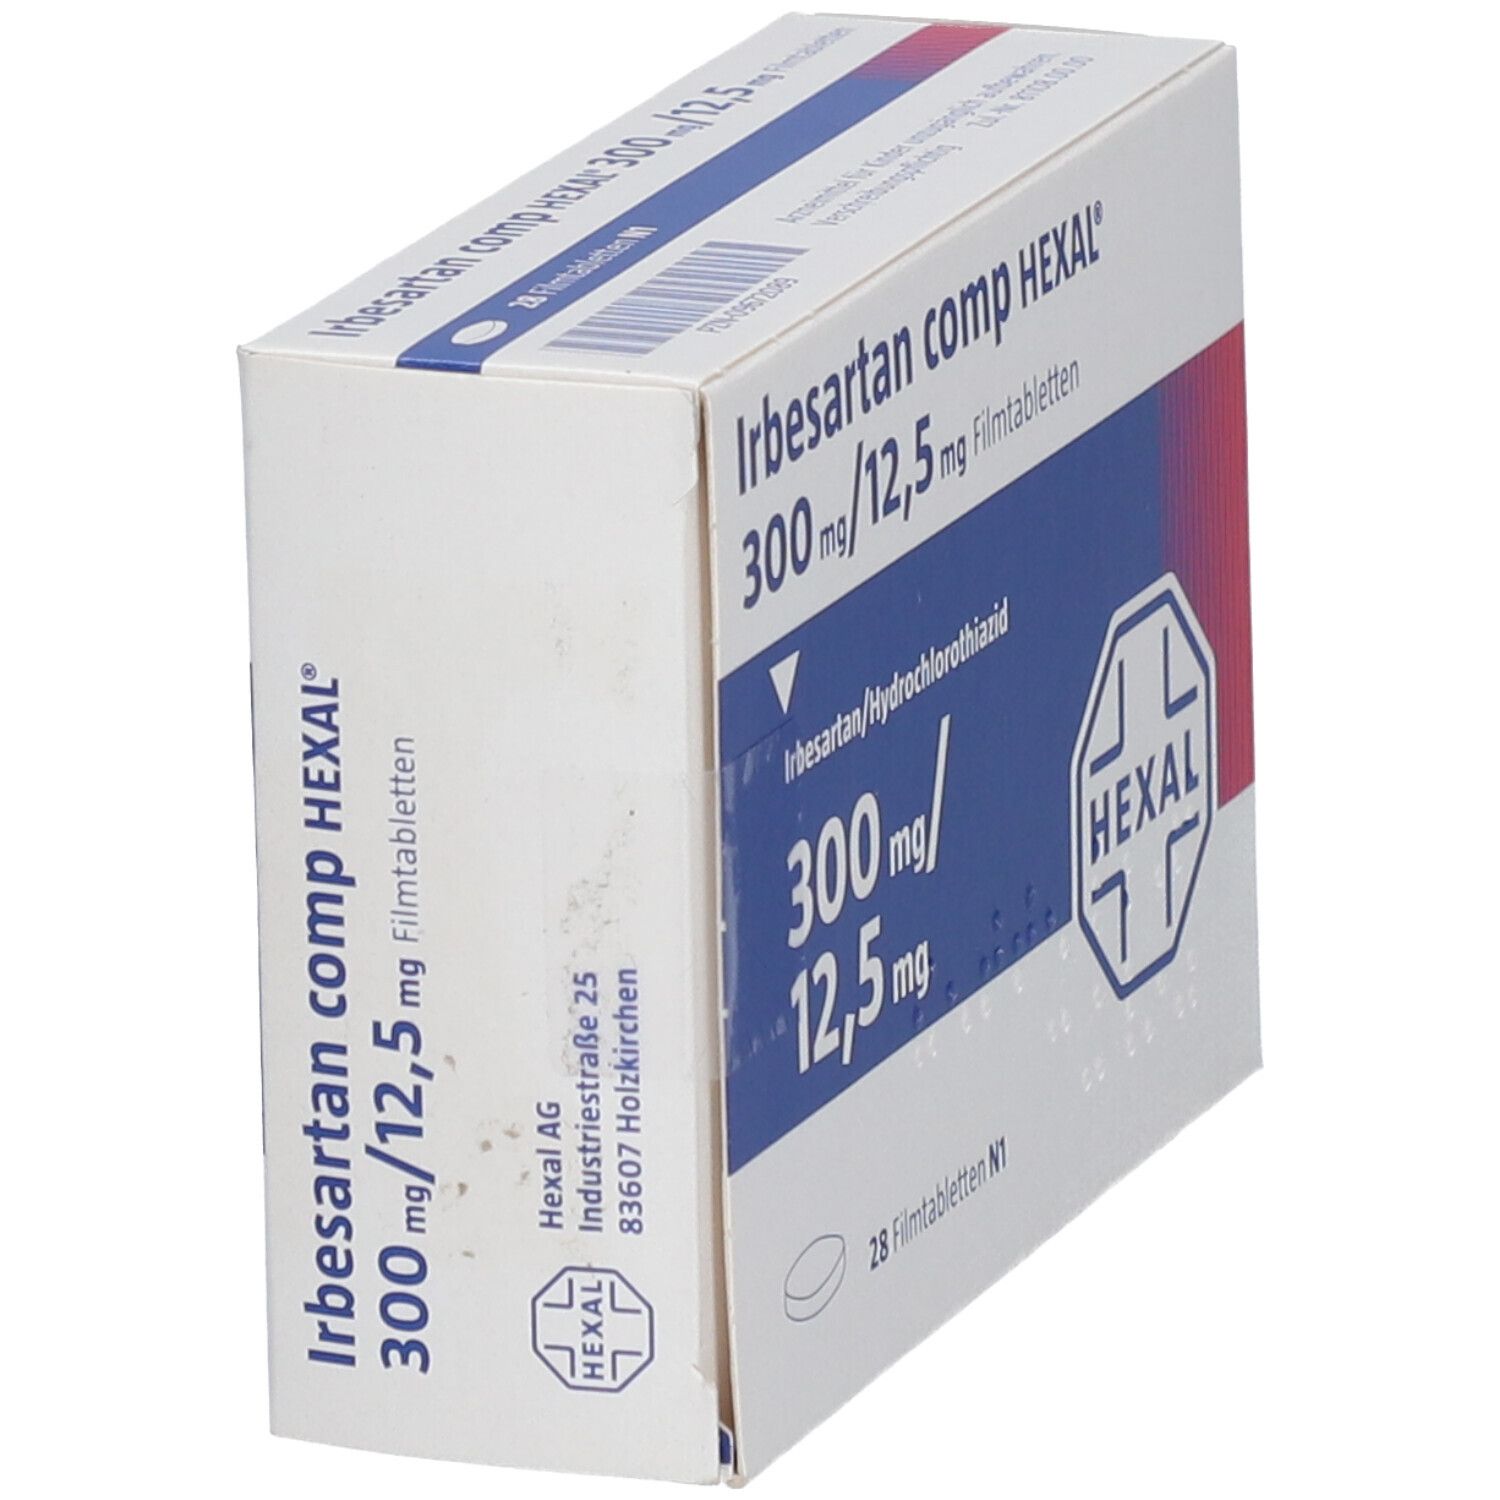 Irbesartan comp HEXAL® 300 mg/12,5 mg